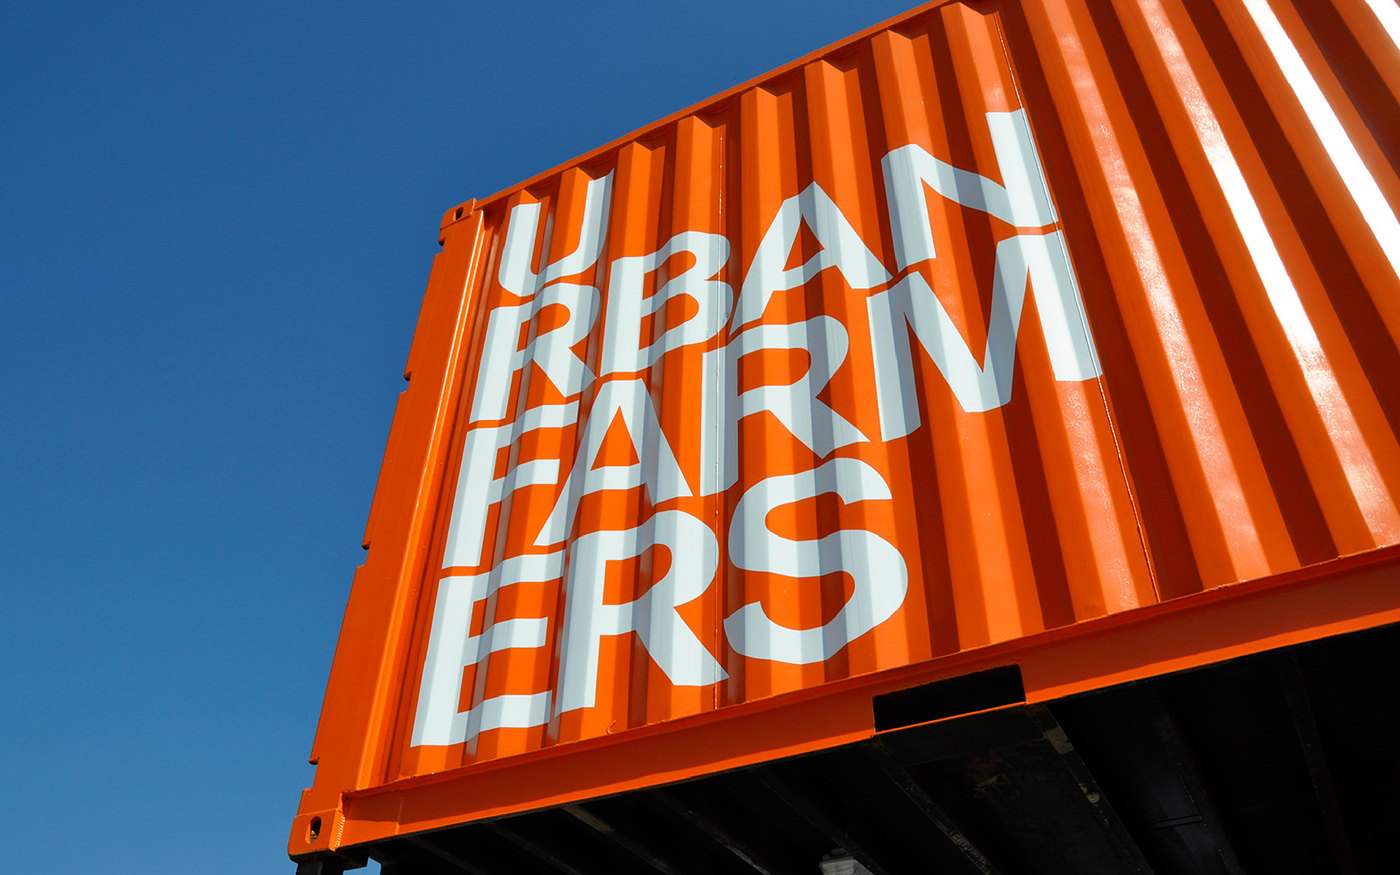 Urban Farmin UrbanFarmers farming rooftop rooftop farm Farm branding cargo container Signage Corporate Identity orange